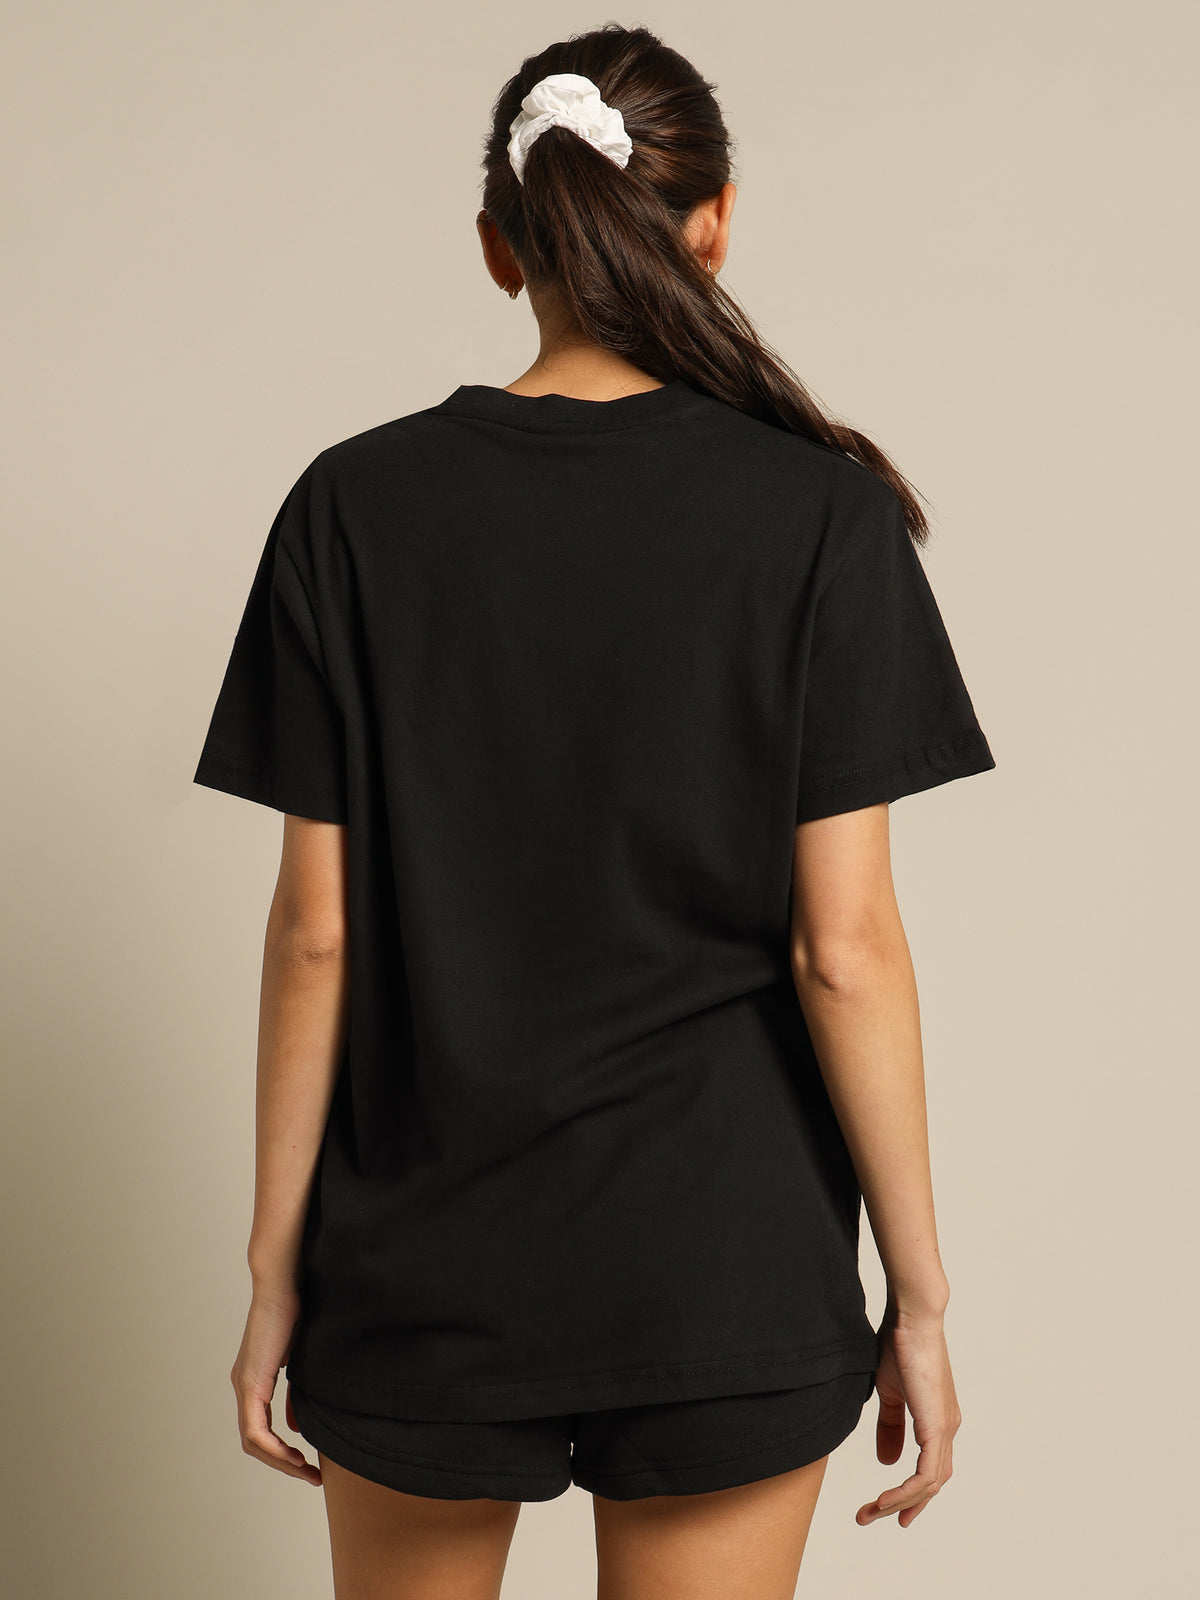 Kittin T-Shirt in Black